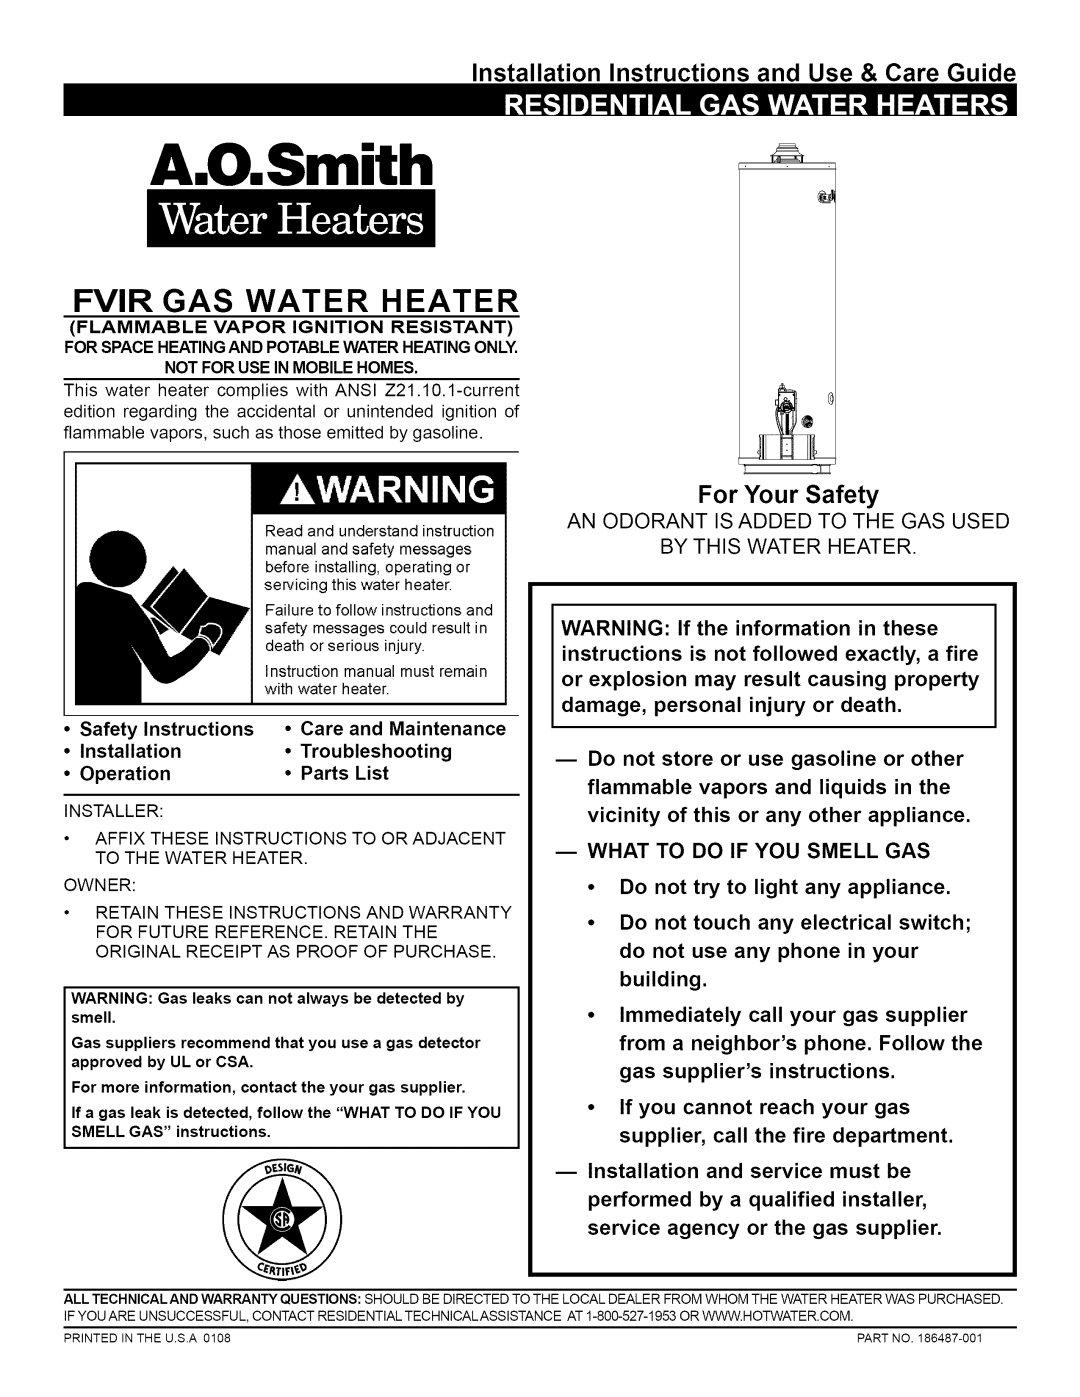 A.O. Smith installation instructions Fvir Gas Water Heater, Installation Instructions and Use & Care Guide, A.O.Smith 